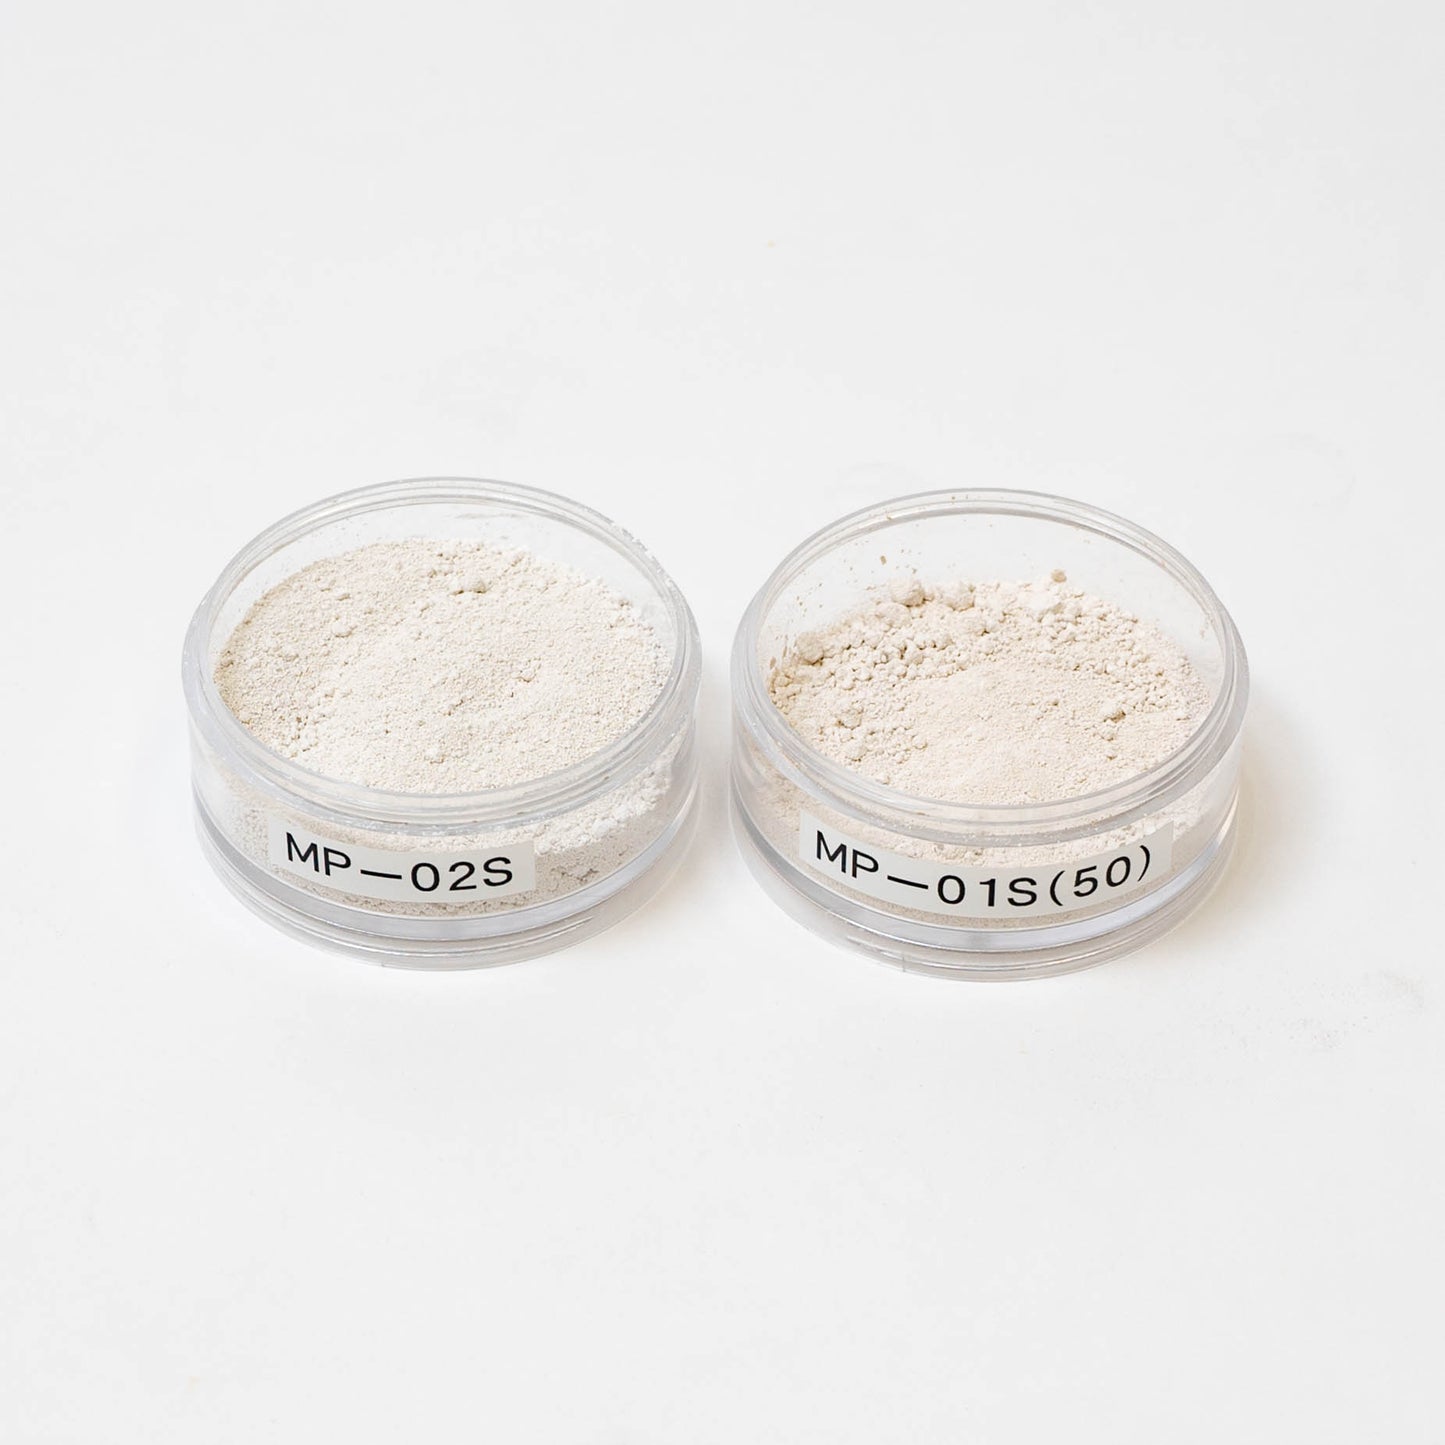 Hormesis (negative ion) powder
MP-01S/02S